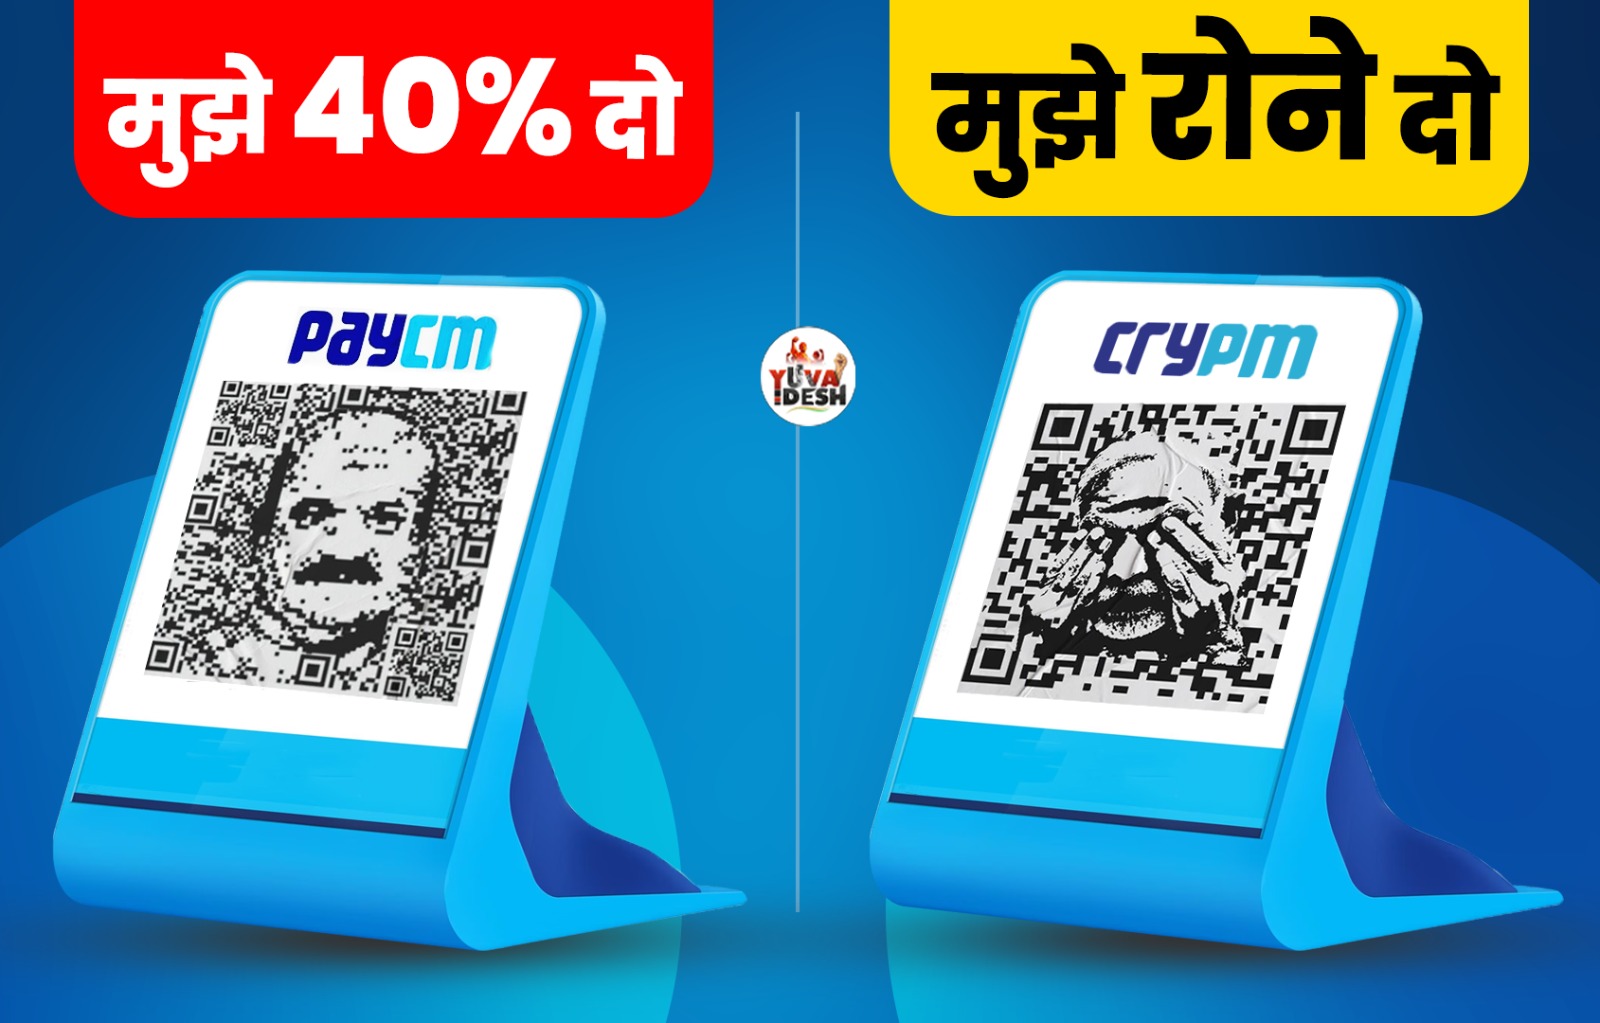 CryPM campaign, Narendra Modi, Priyanka Gandhi Vadra, Karnataka polls, Congress, BJP